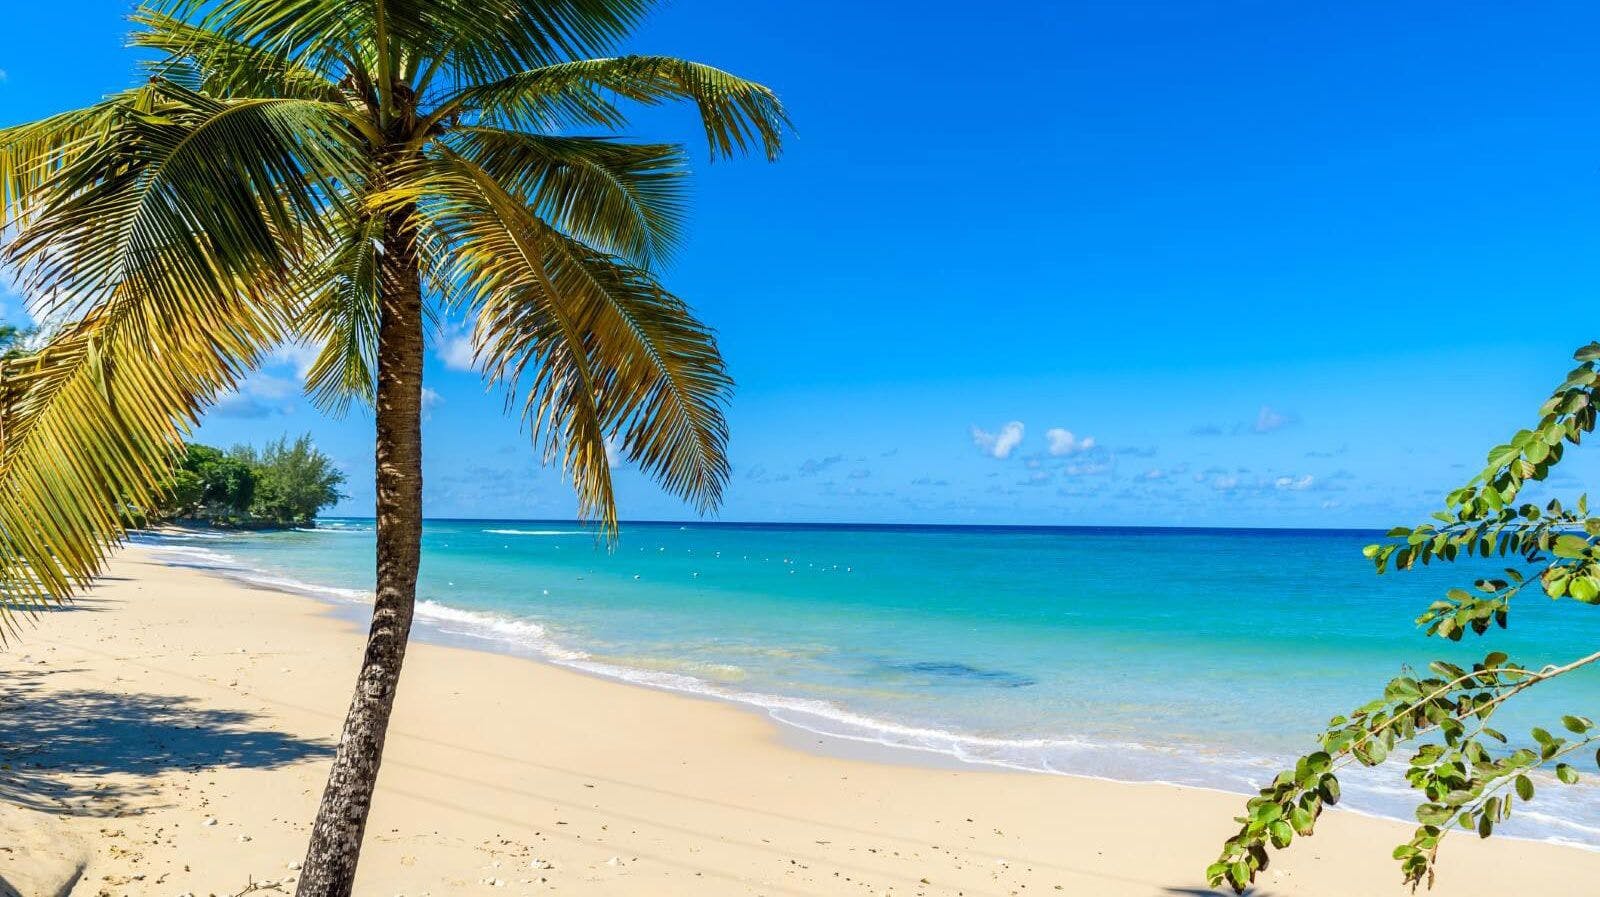 White sand beach with palm tree